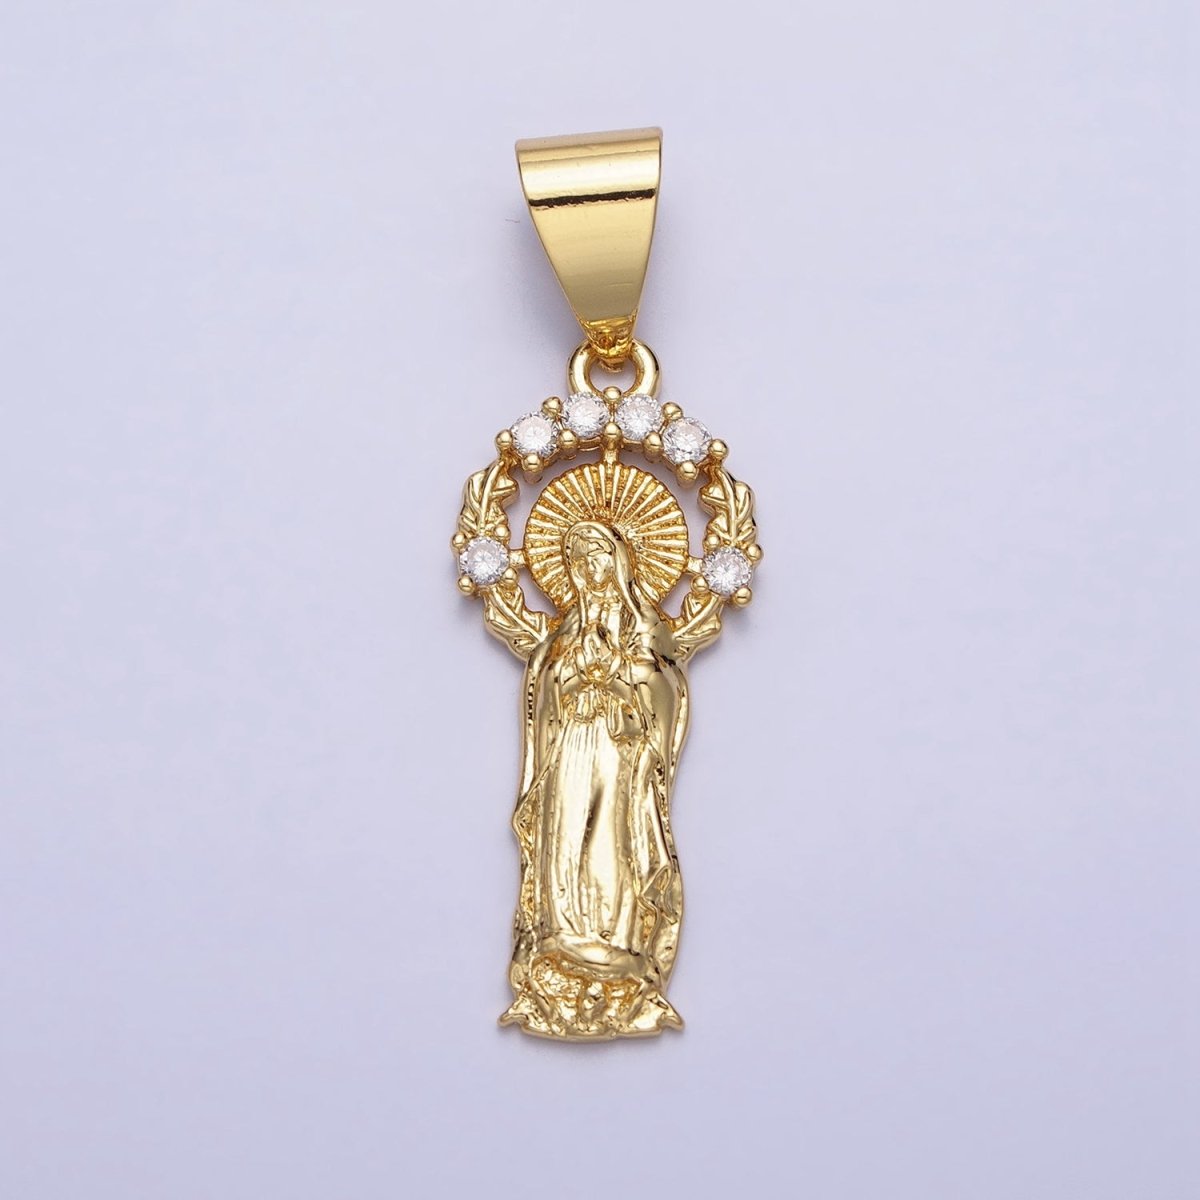 Dainty 24K Gold Filled Virgin Mary Pendant Catholic Religious Jewelry Making AA259 - DLUXCA